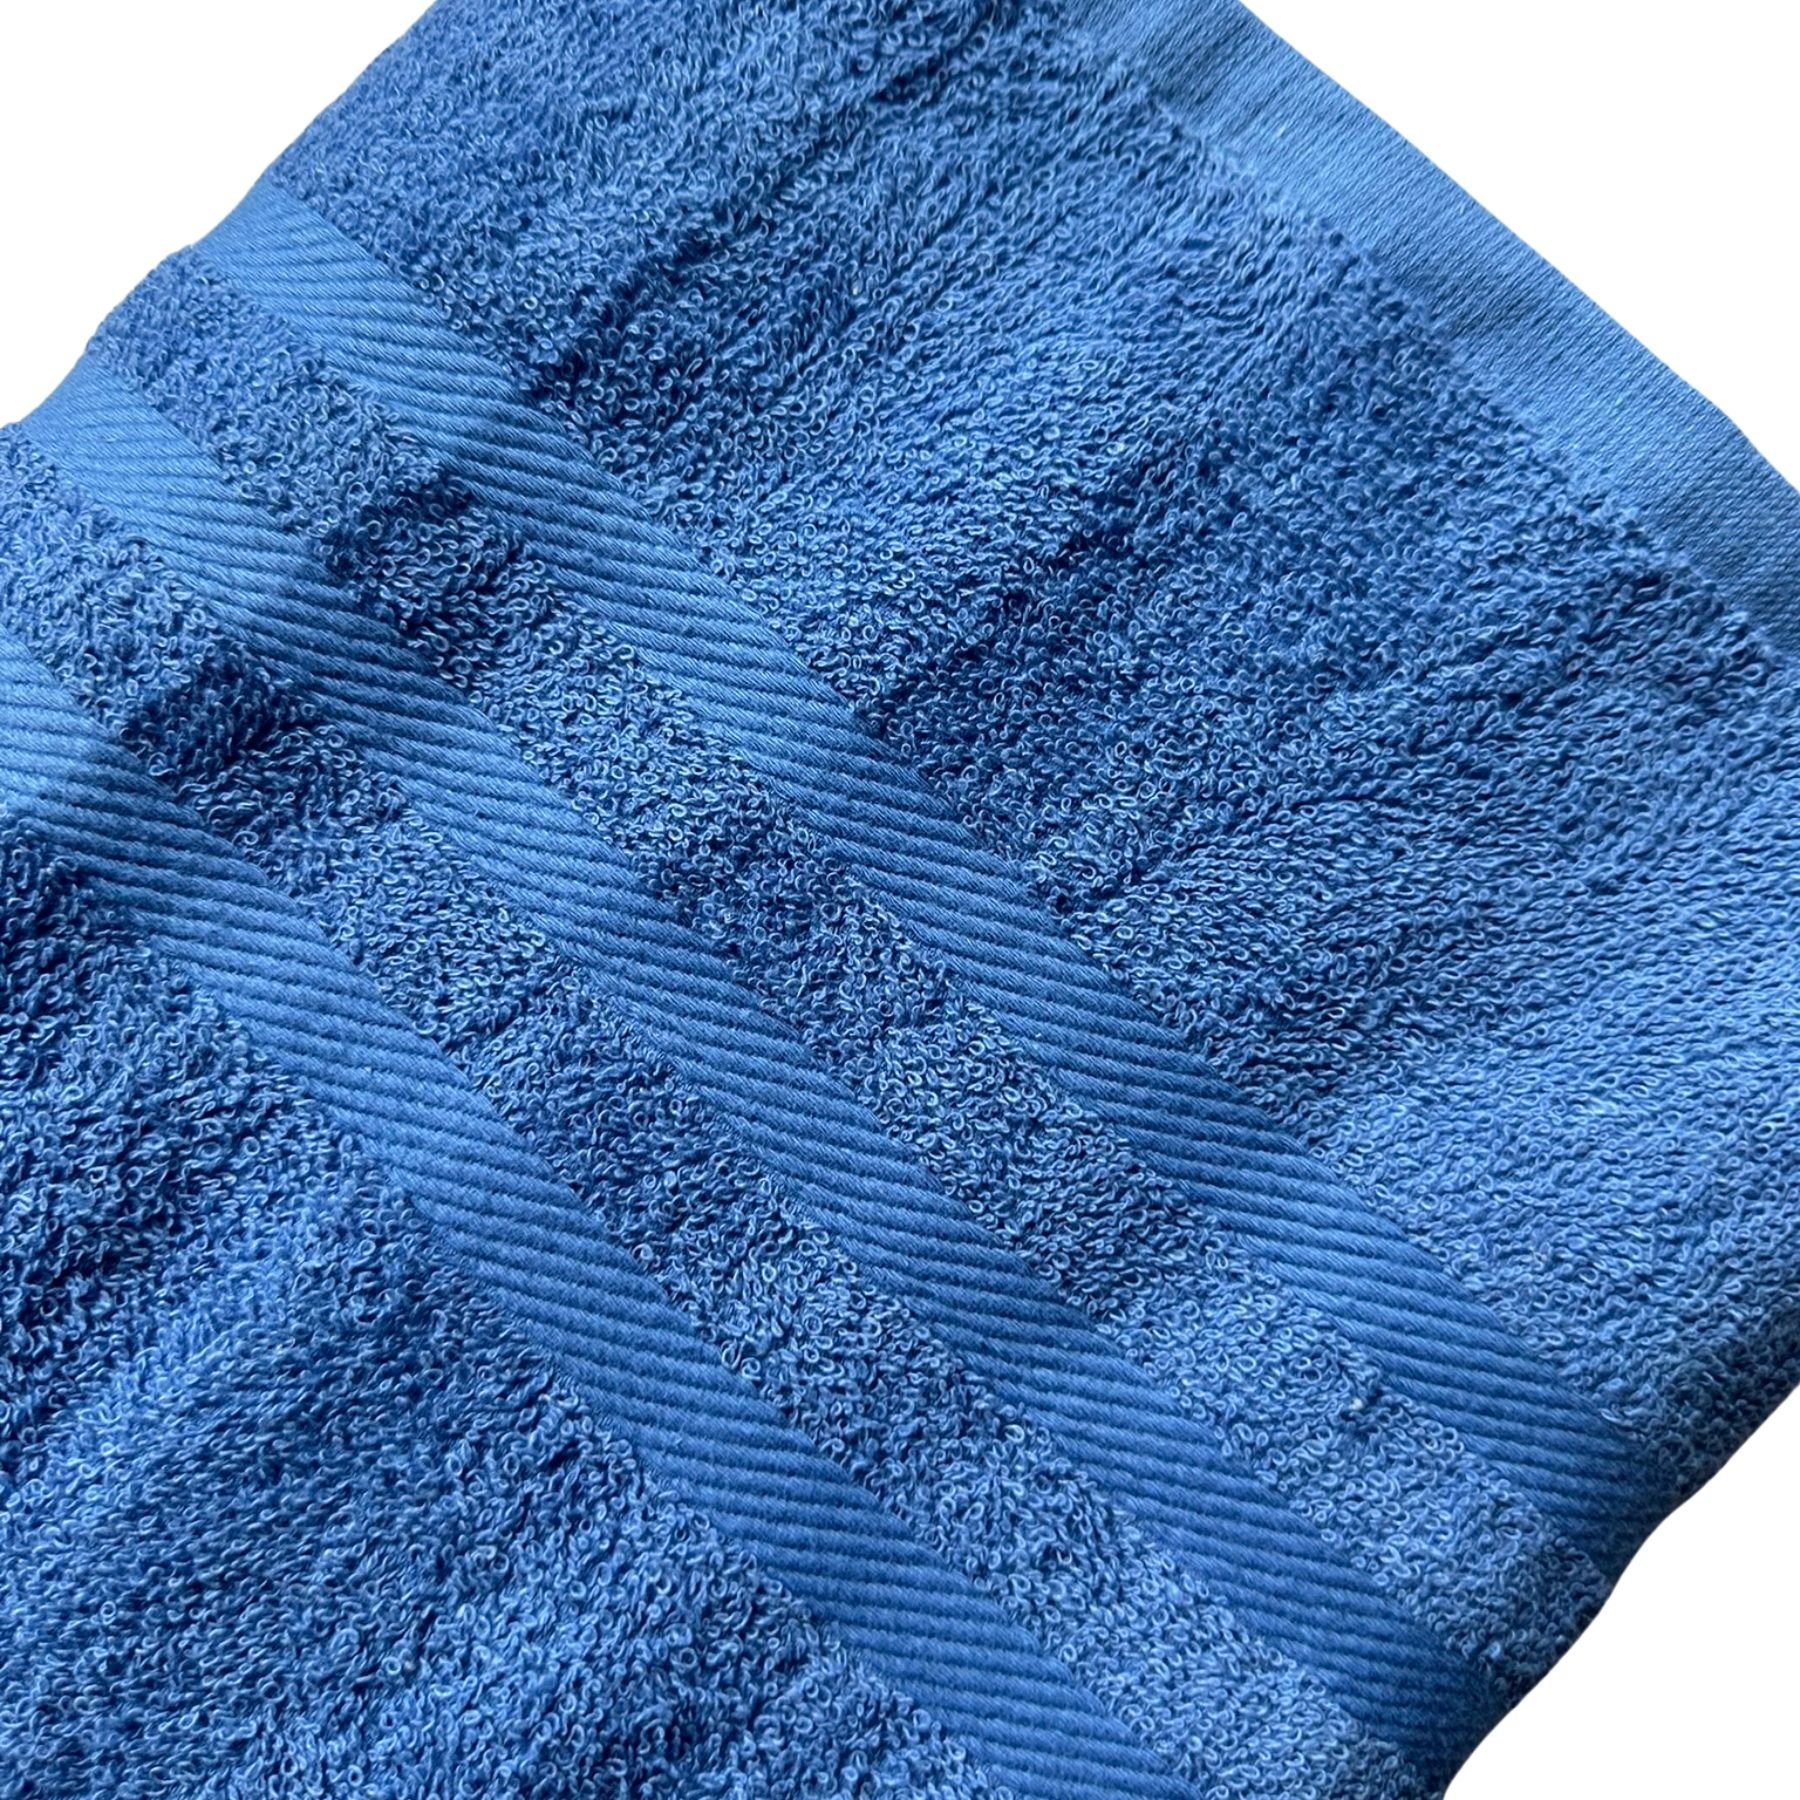 Farben Duschtücherset 100%Baumwolle aus Duschtuch 100% Baumwolle (2-St), Unifarbenes FSH Blau verschiedene 2 Duschtücher 70x140cm Baumwolle 450g/m²,